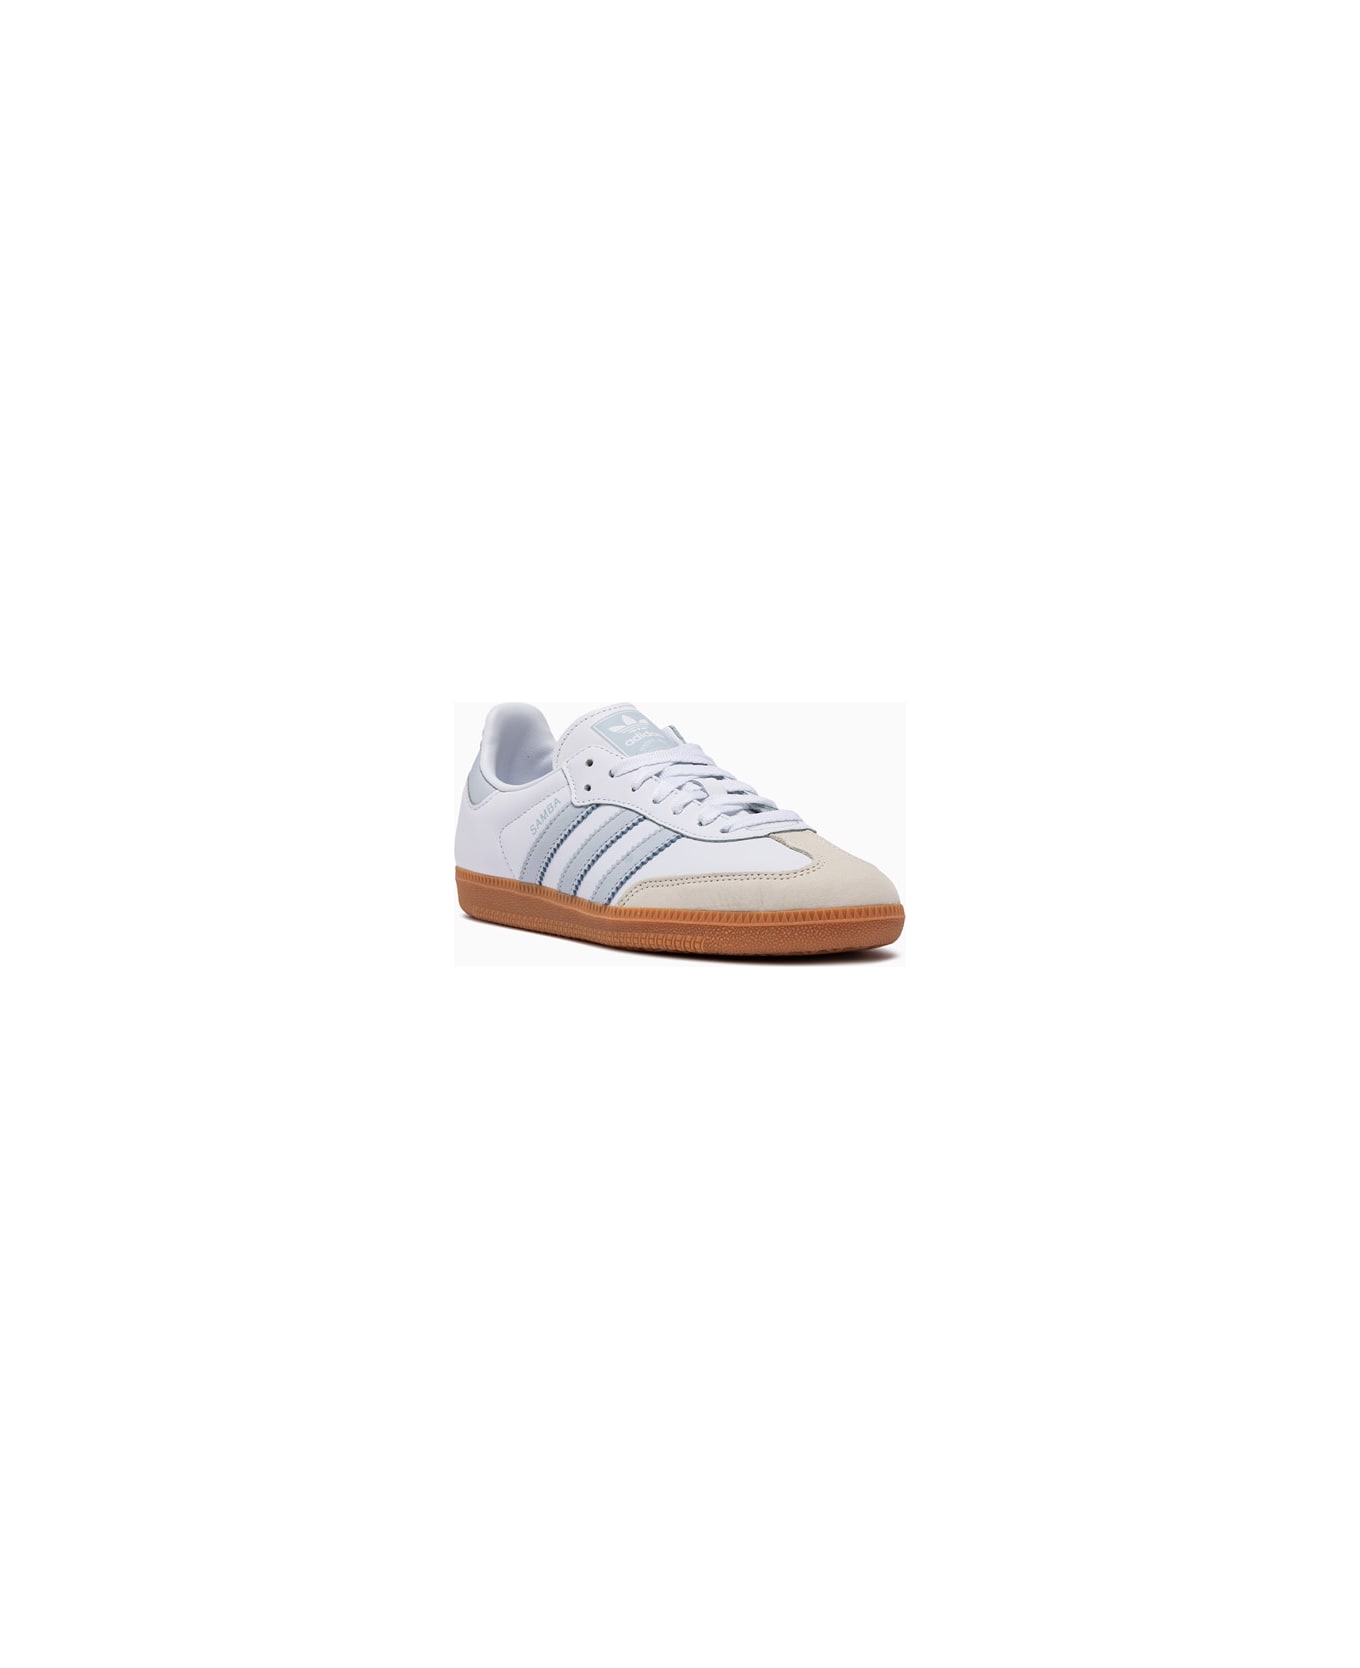 Adidas Samba Og W Sneakers - White